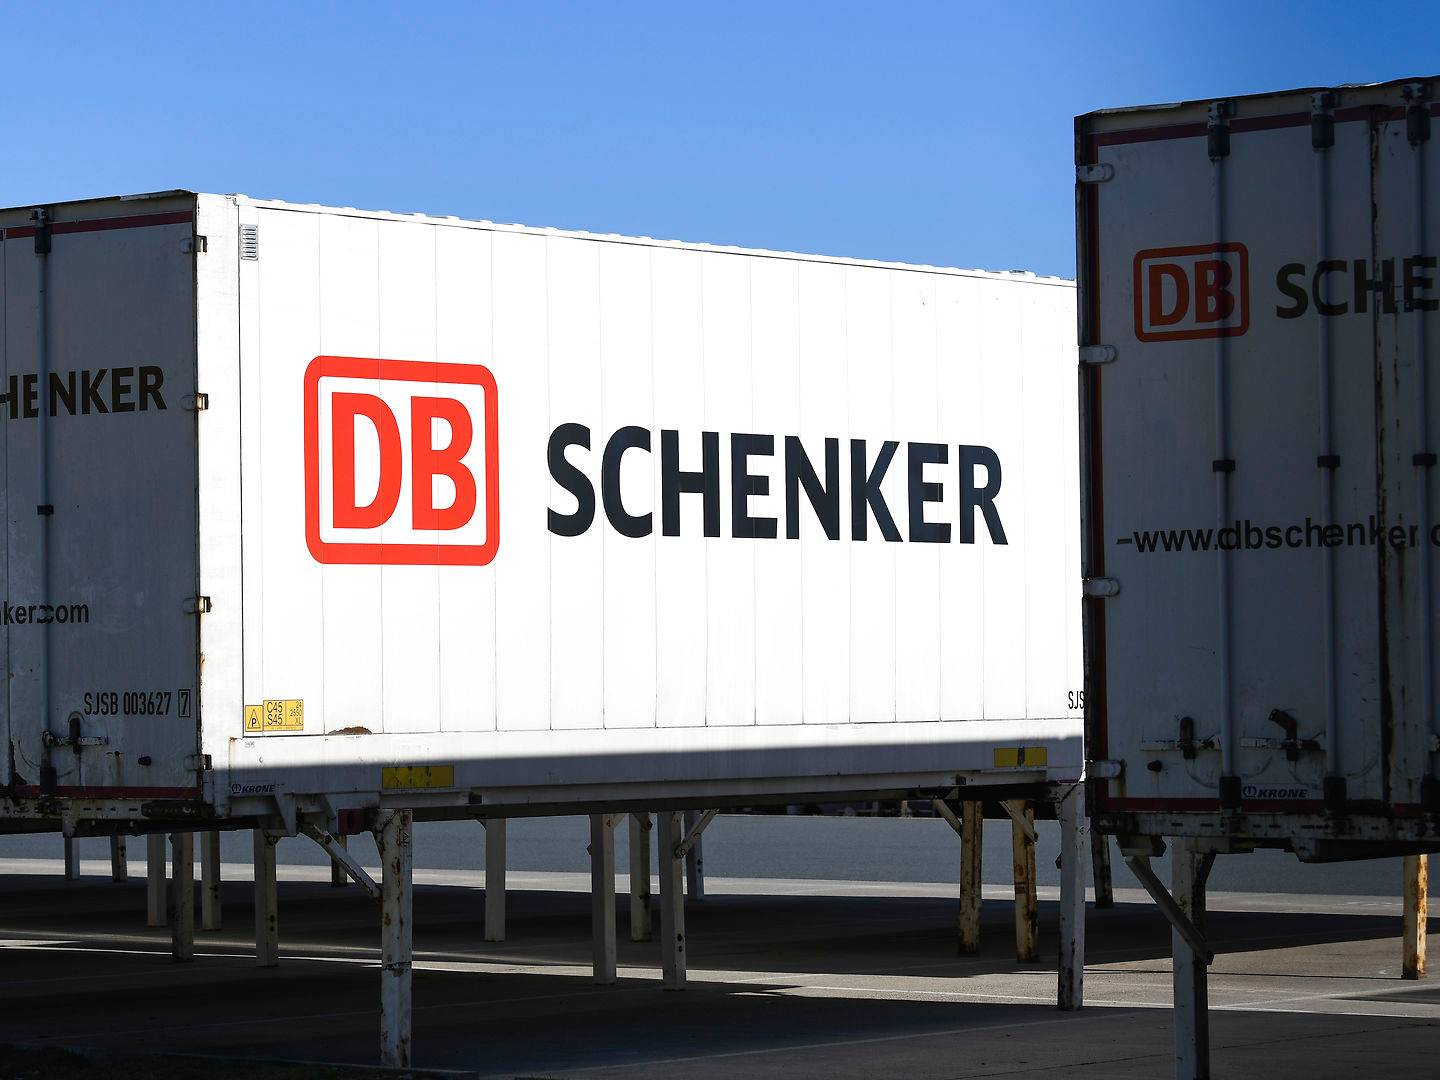 DB Schenker provides automated logistics solution for MediaMarkt